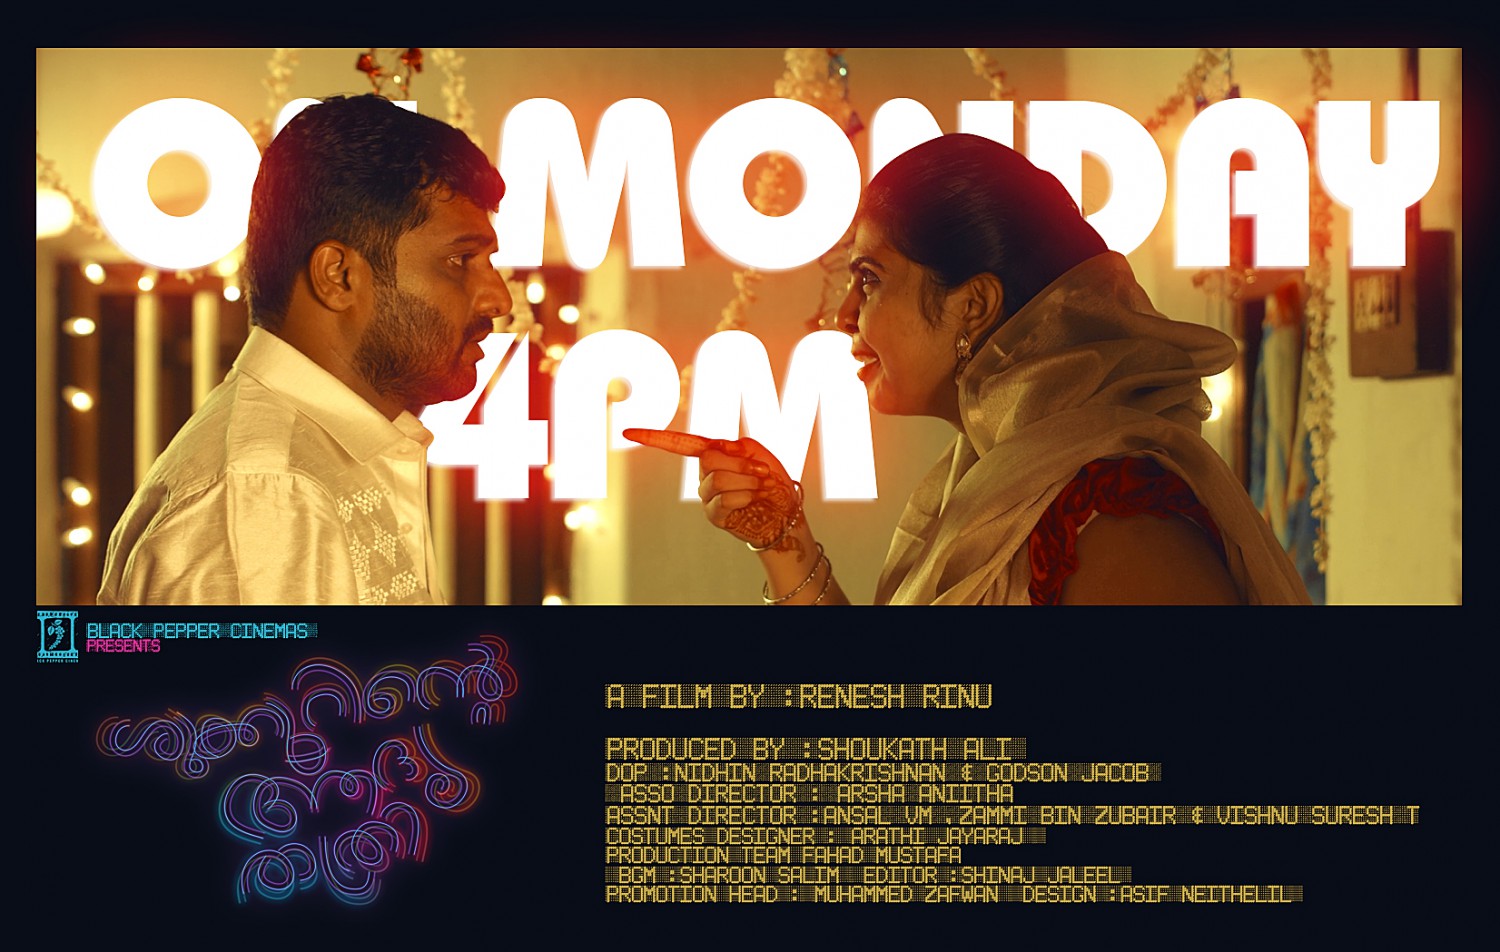 Extra Large Movie Poster Image for Shukkoorinte Adyarathri